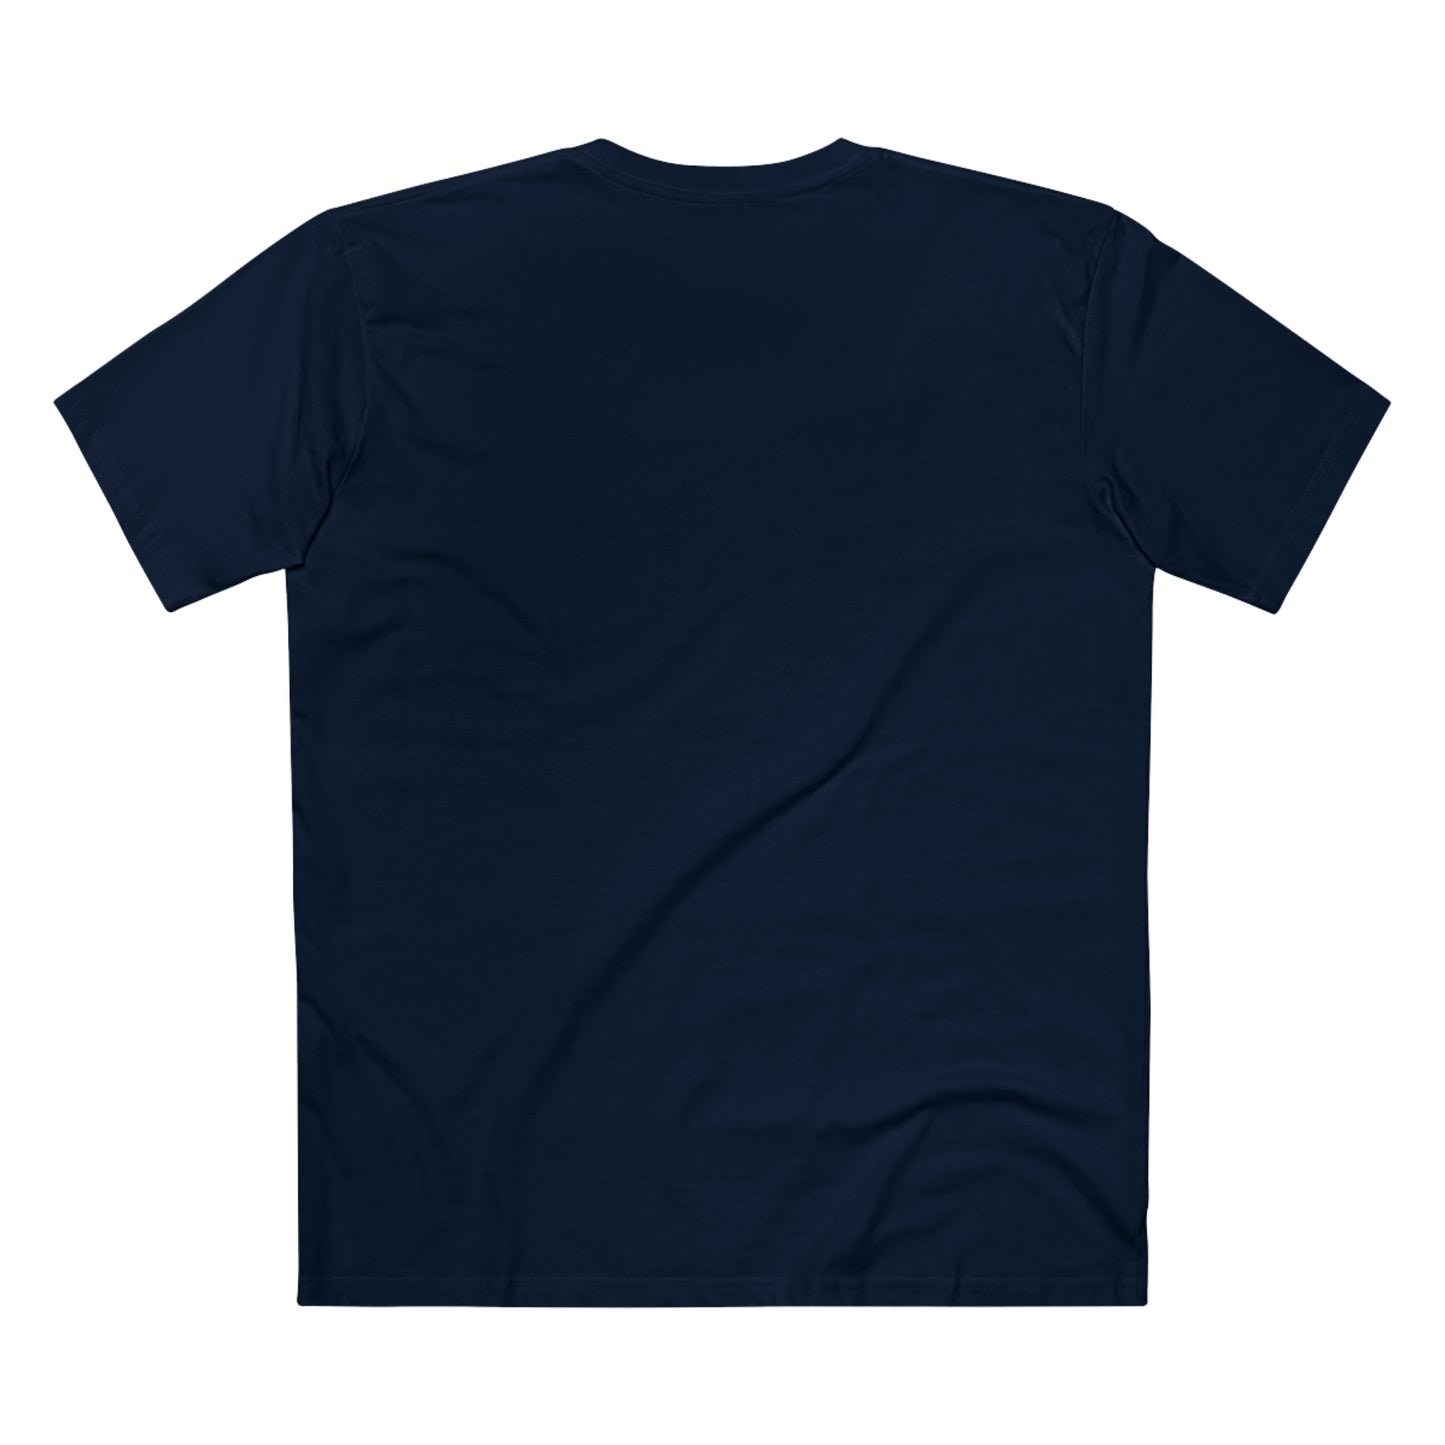 No Mercy Pickleball Series - T-Shirt